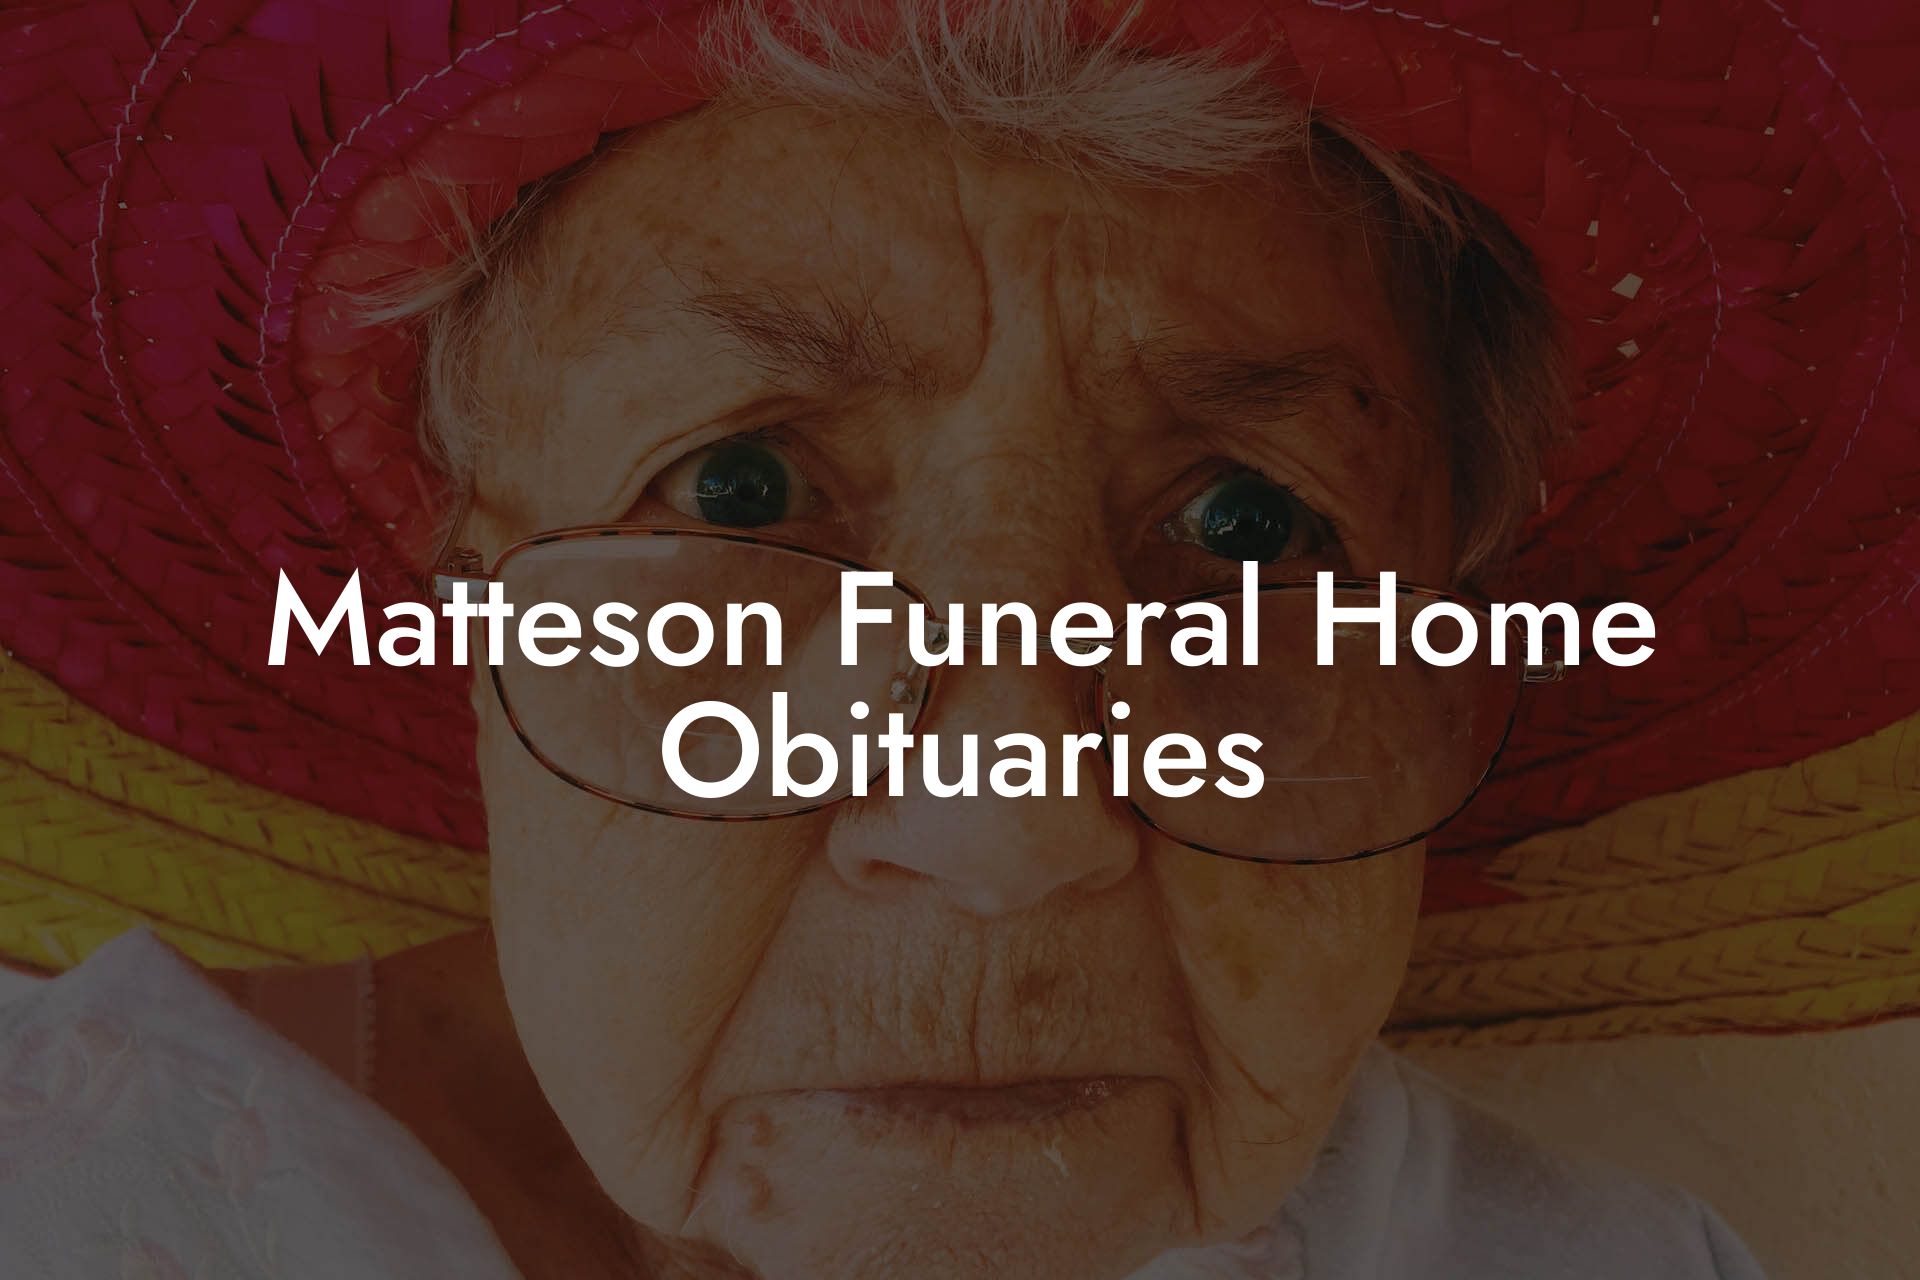 Matteson Funeral Home Obituaries